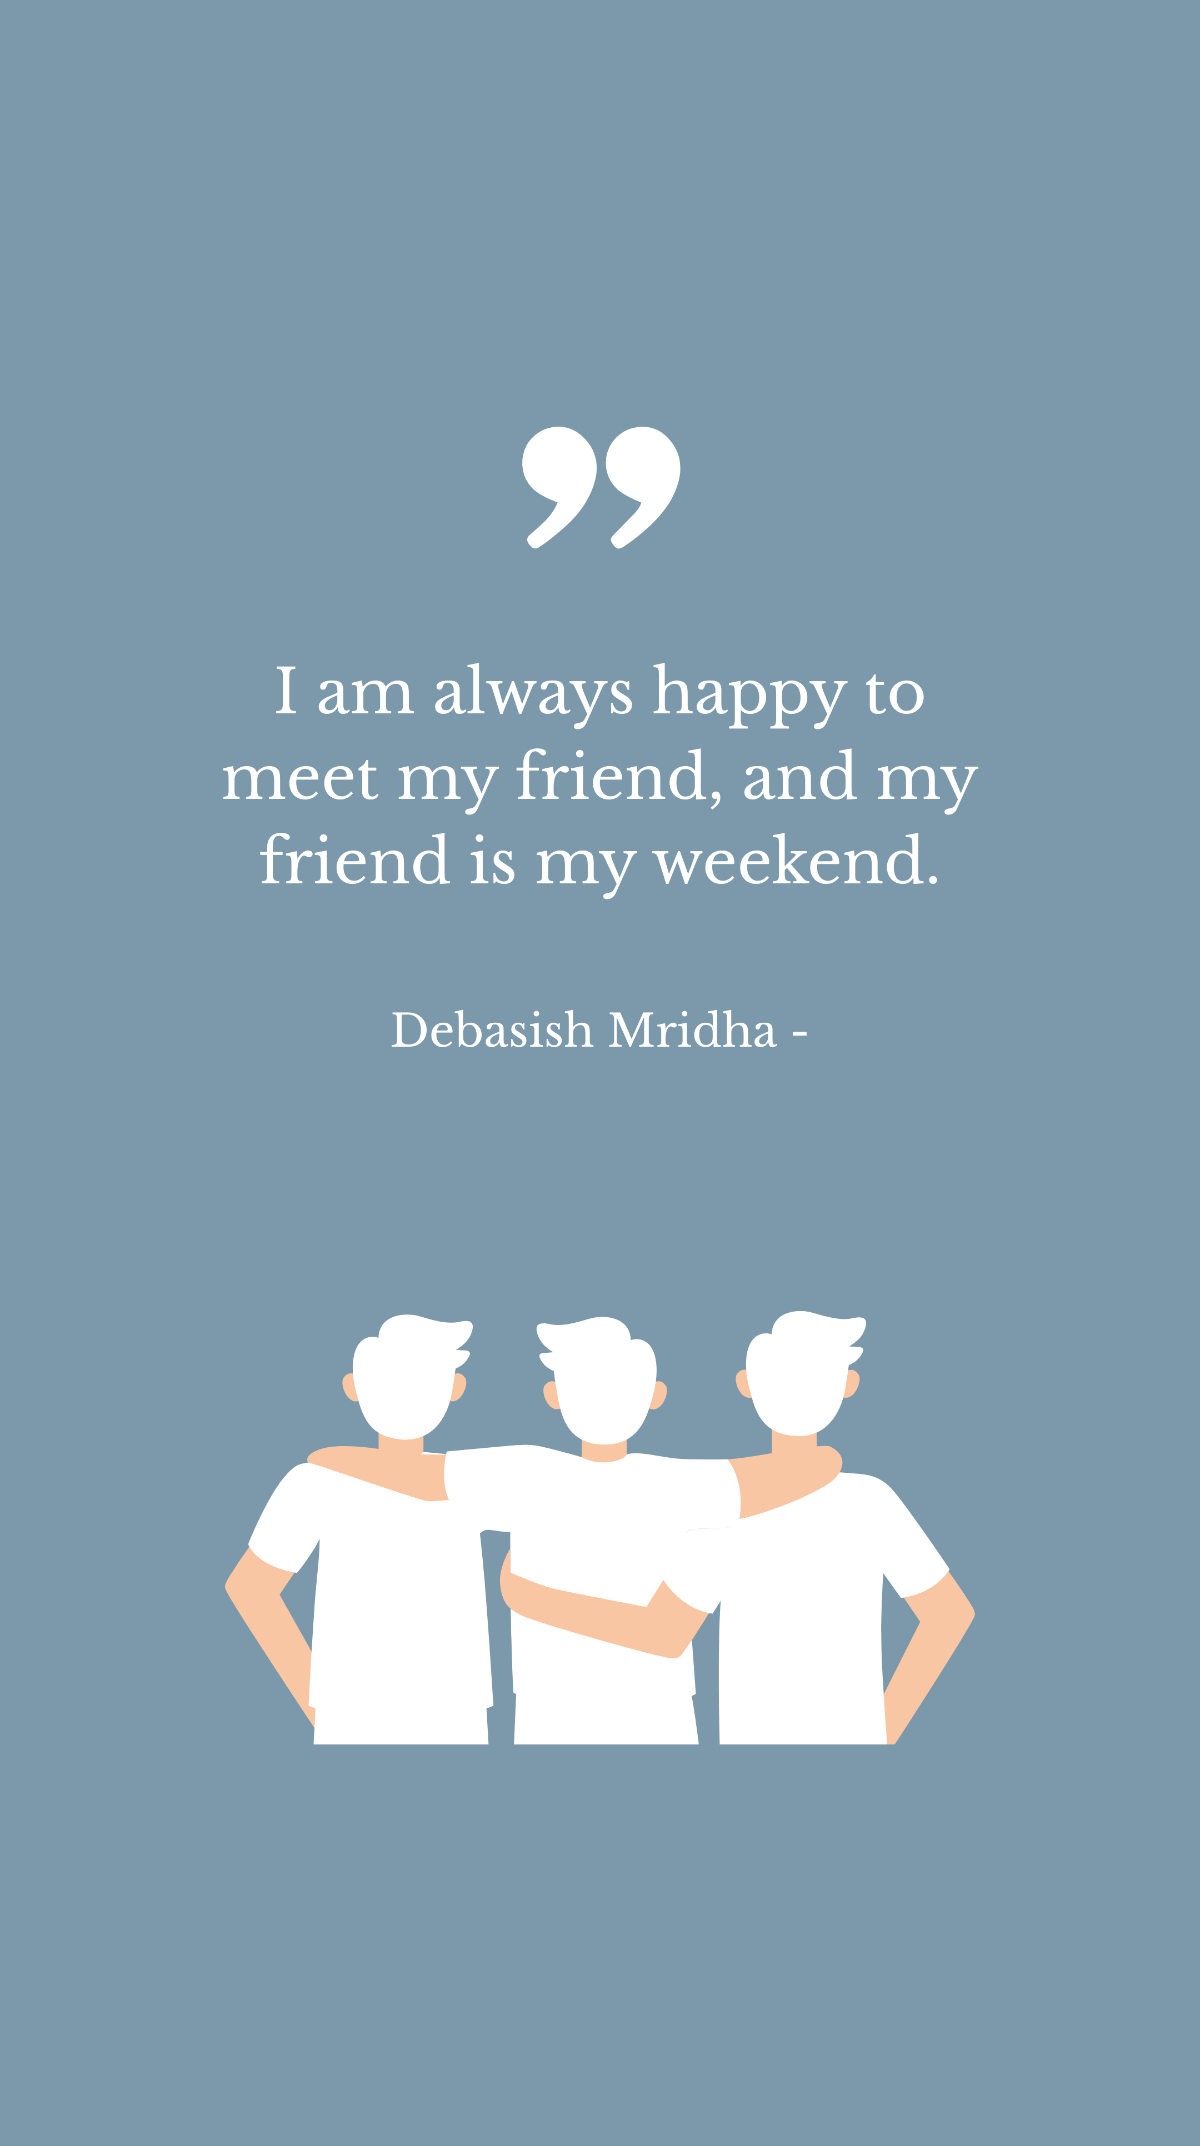 Debasish Mridha - I am always happy to meet my friend, and my friend is my weekend. Template